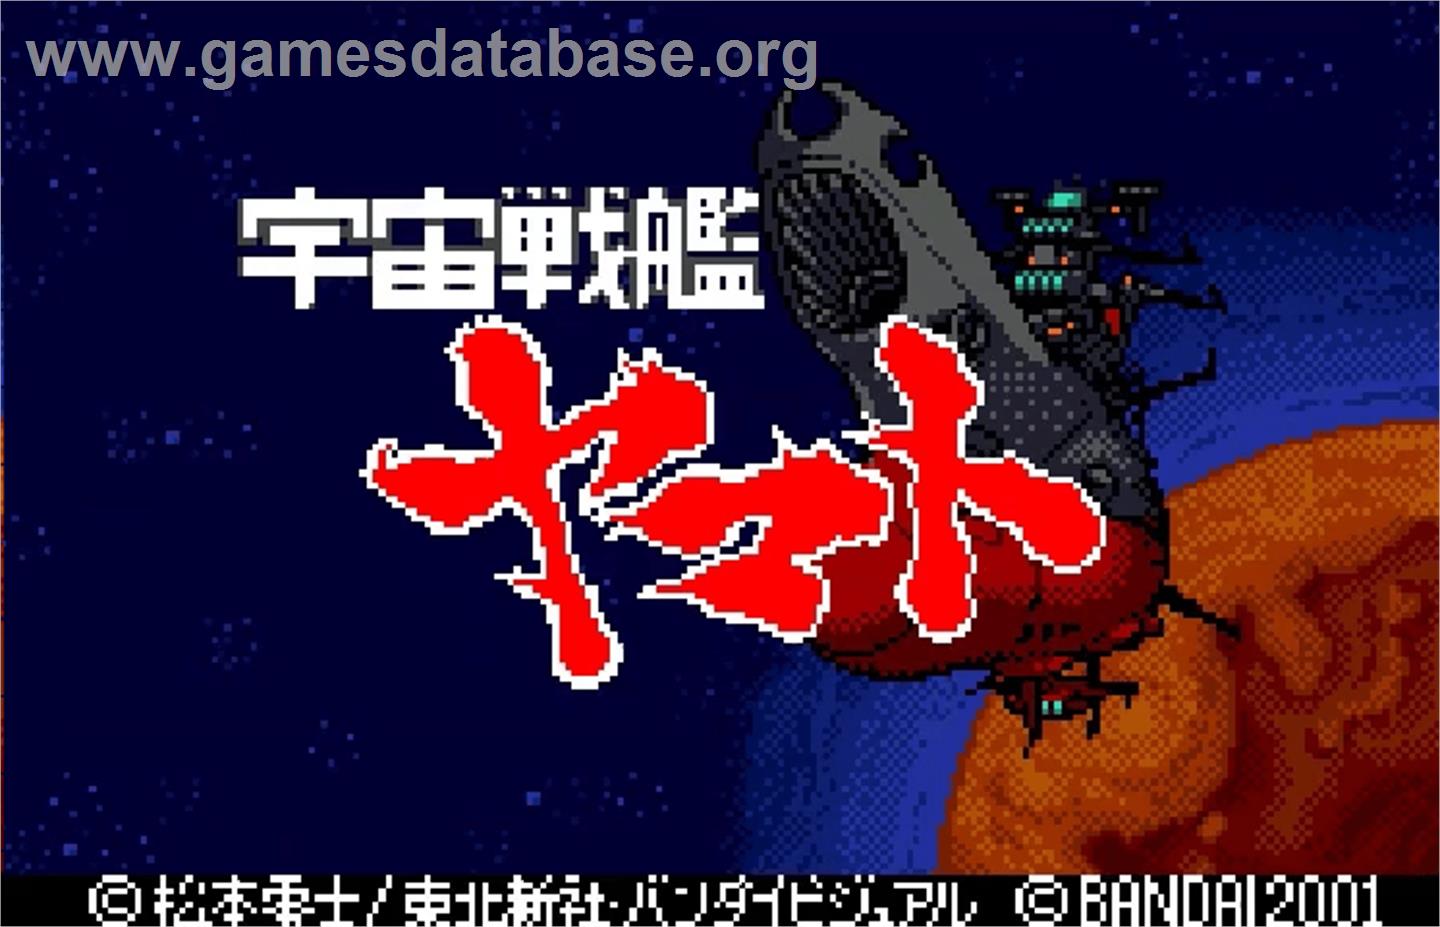 Space Battleship Yamato - Bandai WonderSwan Color - Artwork - Title Screen